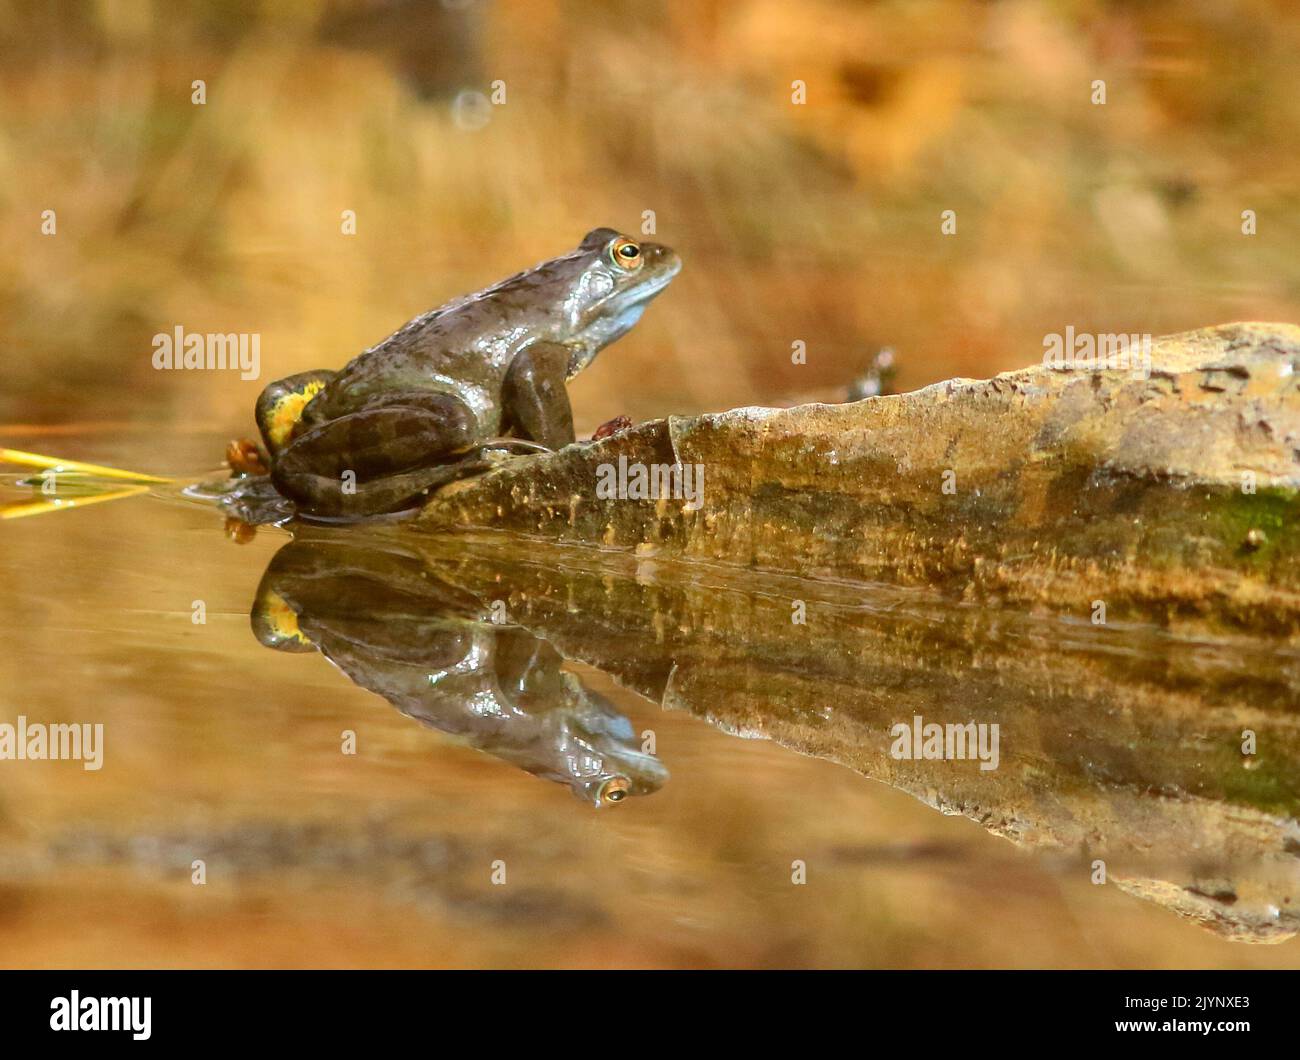 European frog (Rana temporaria) at the water's edge Stock Photo